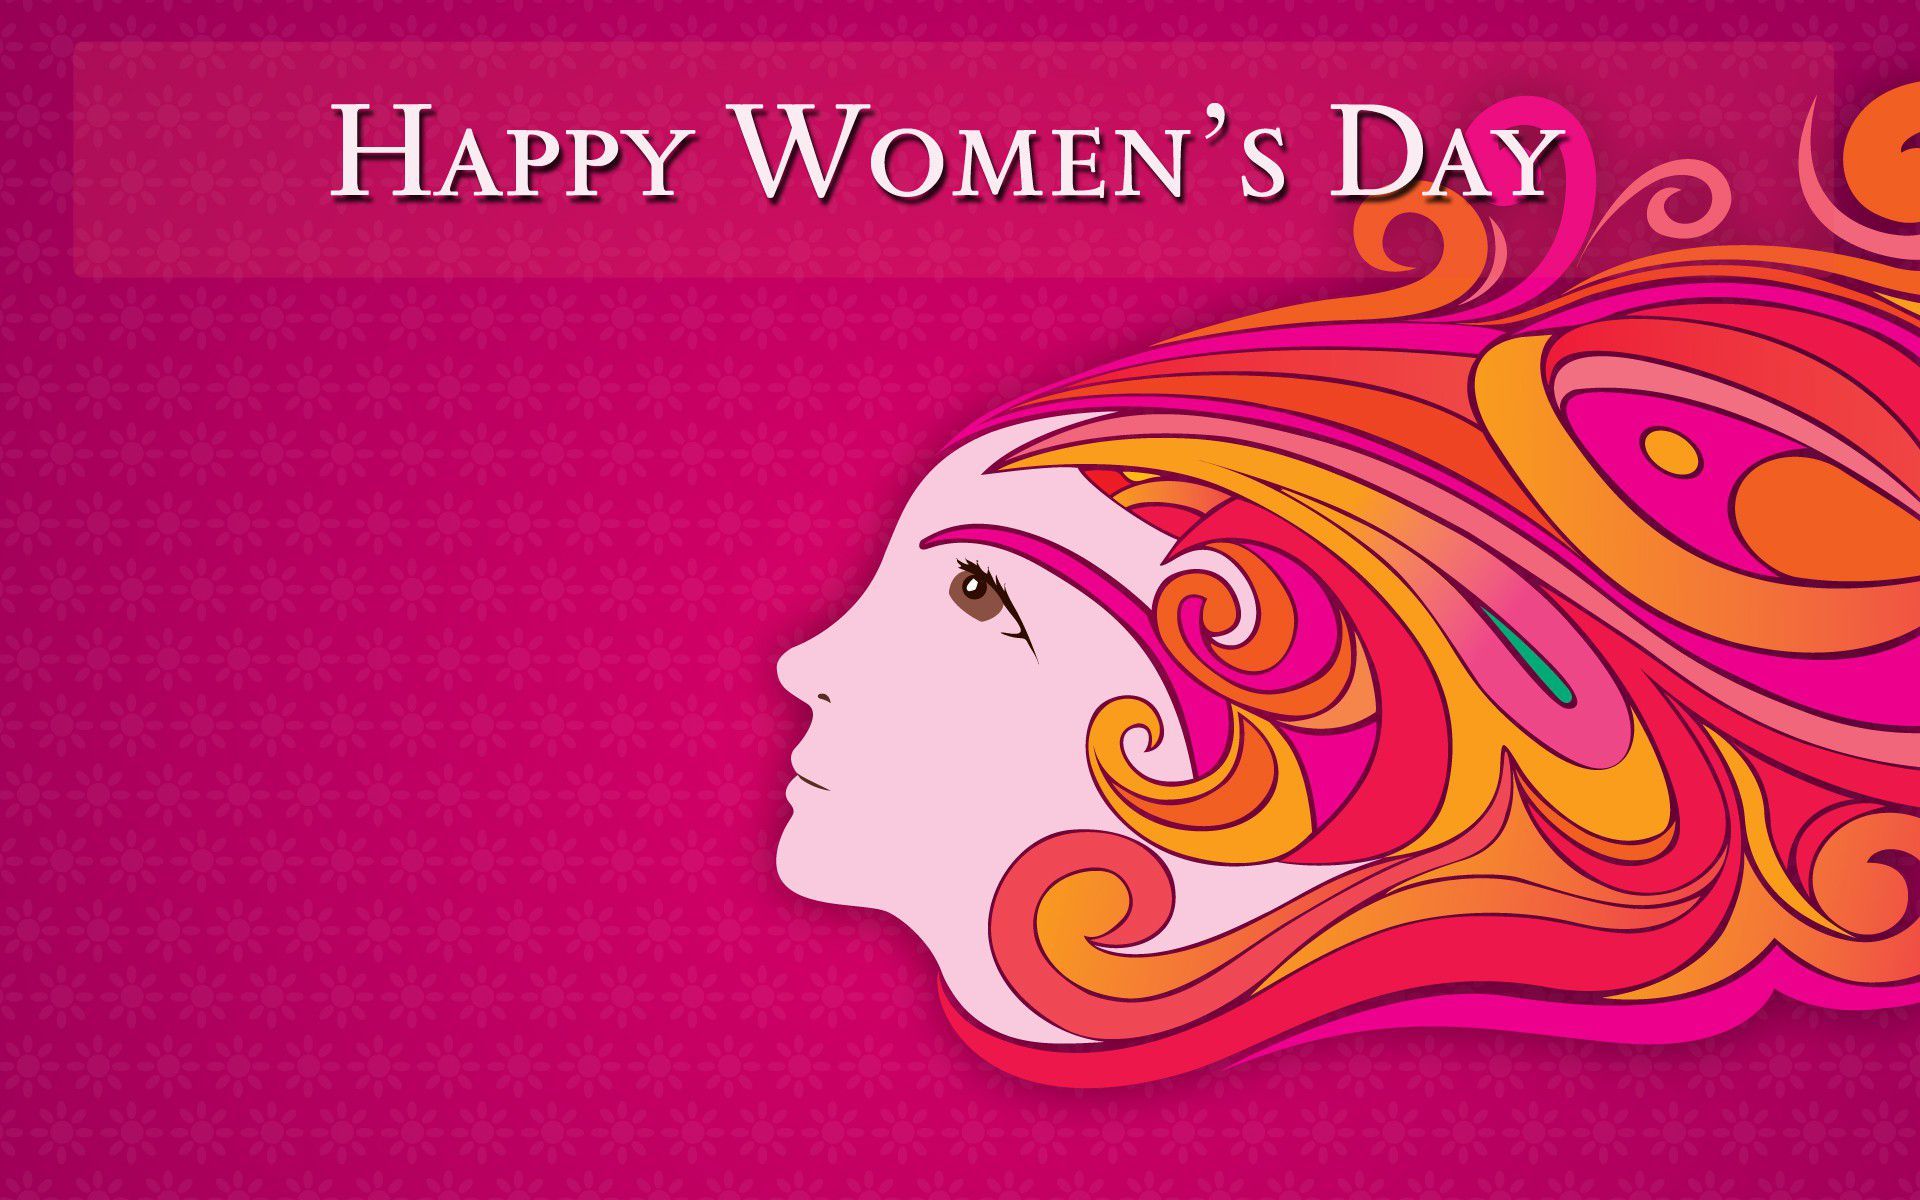 Happy Women's Day Free HD Wallpaper & Image 2020